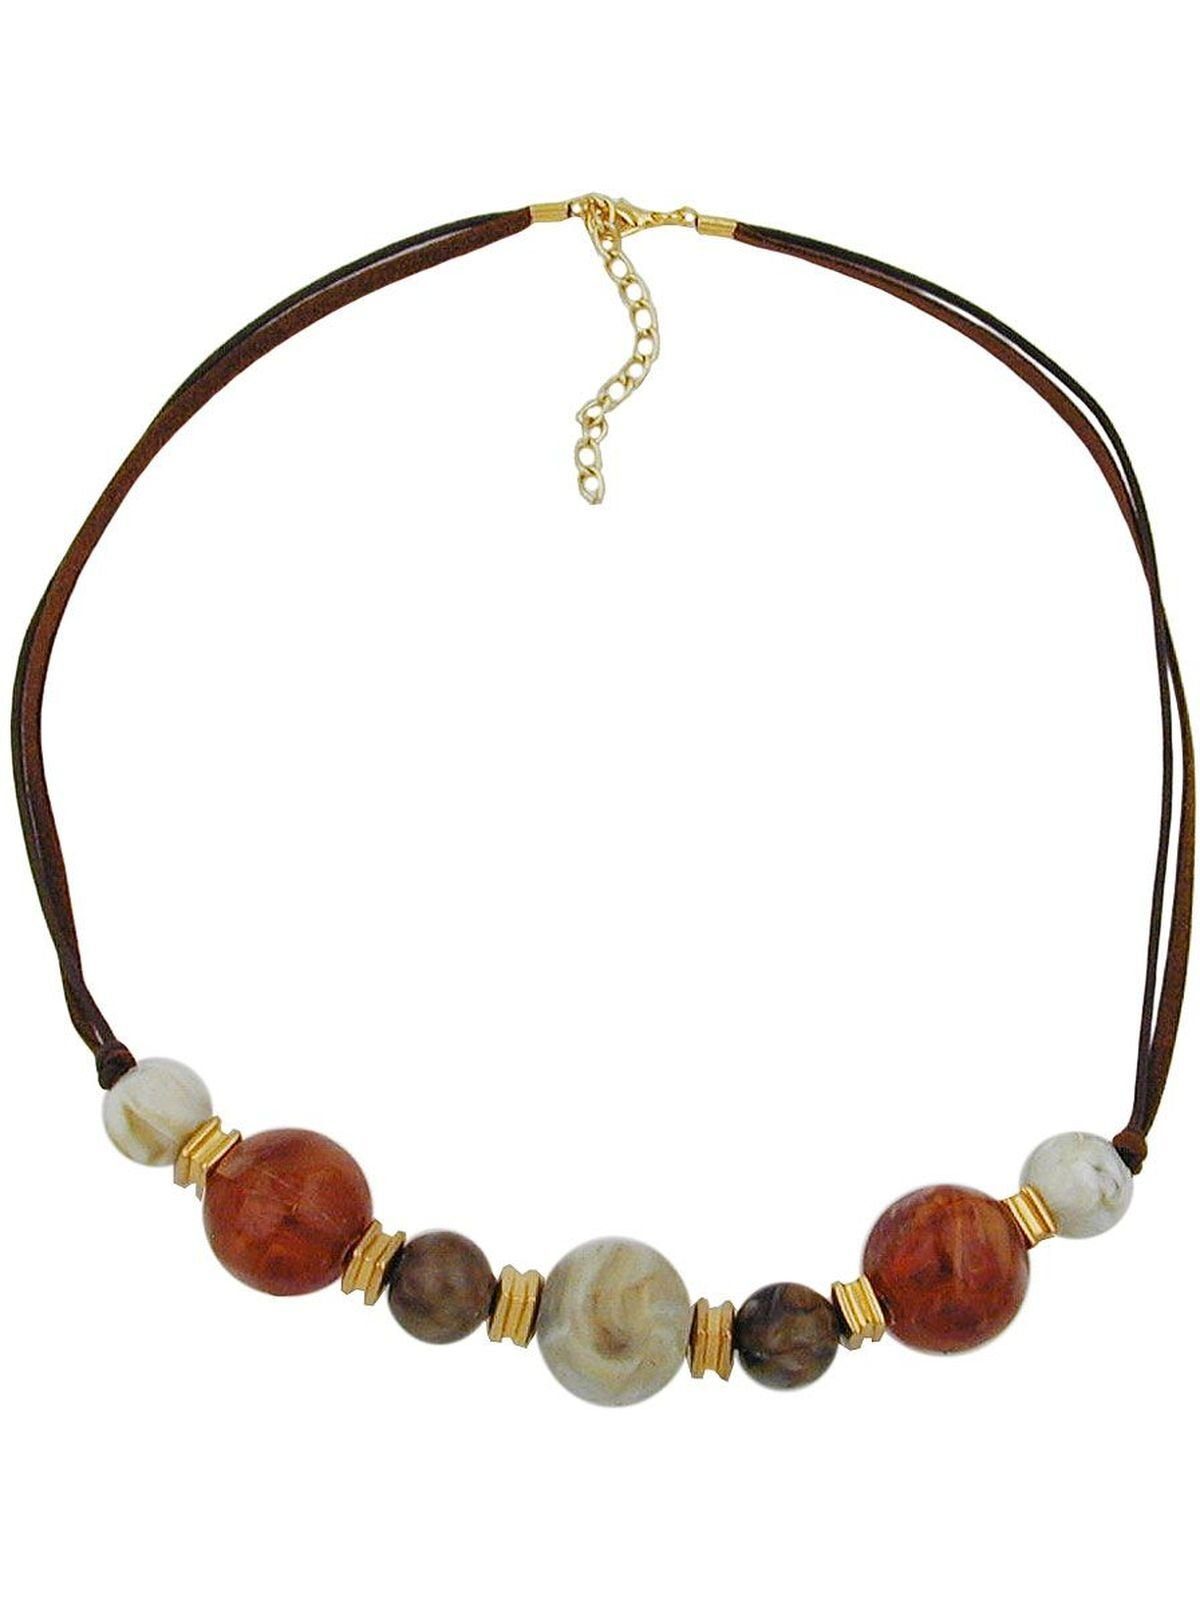 Gallay Kunststoffperlen (1-tlg) 55cm Kordel Perlenkette braun natur-braun-karamel-goldfarben